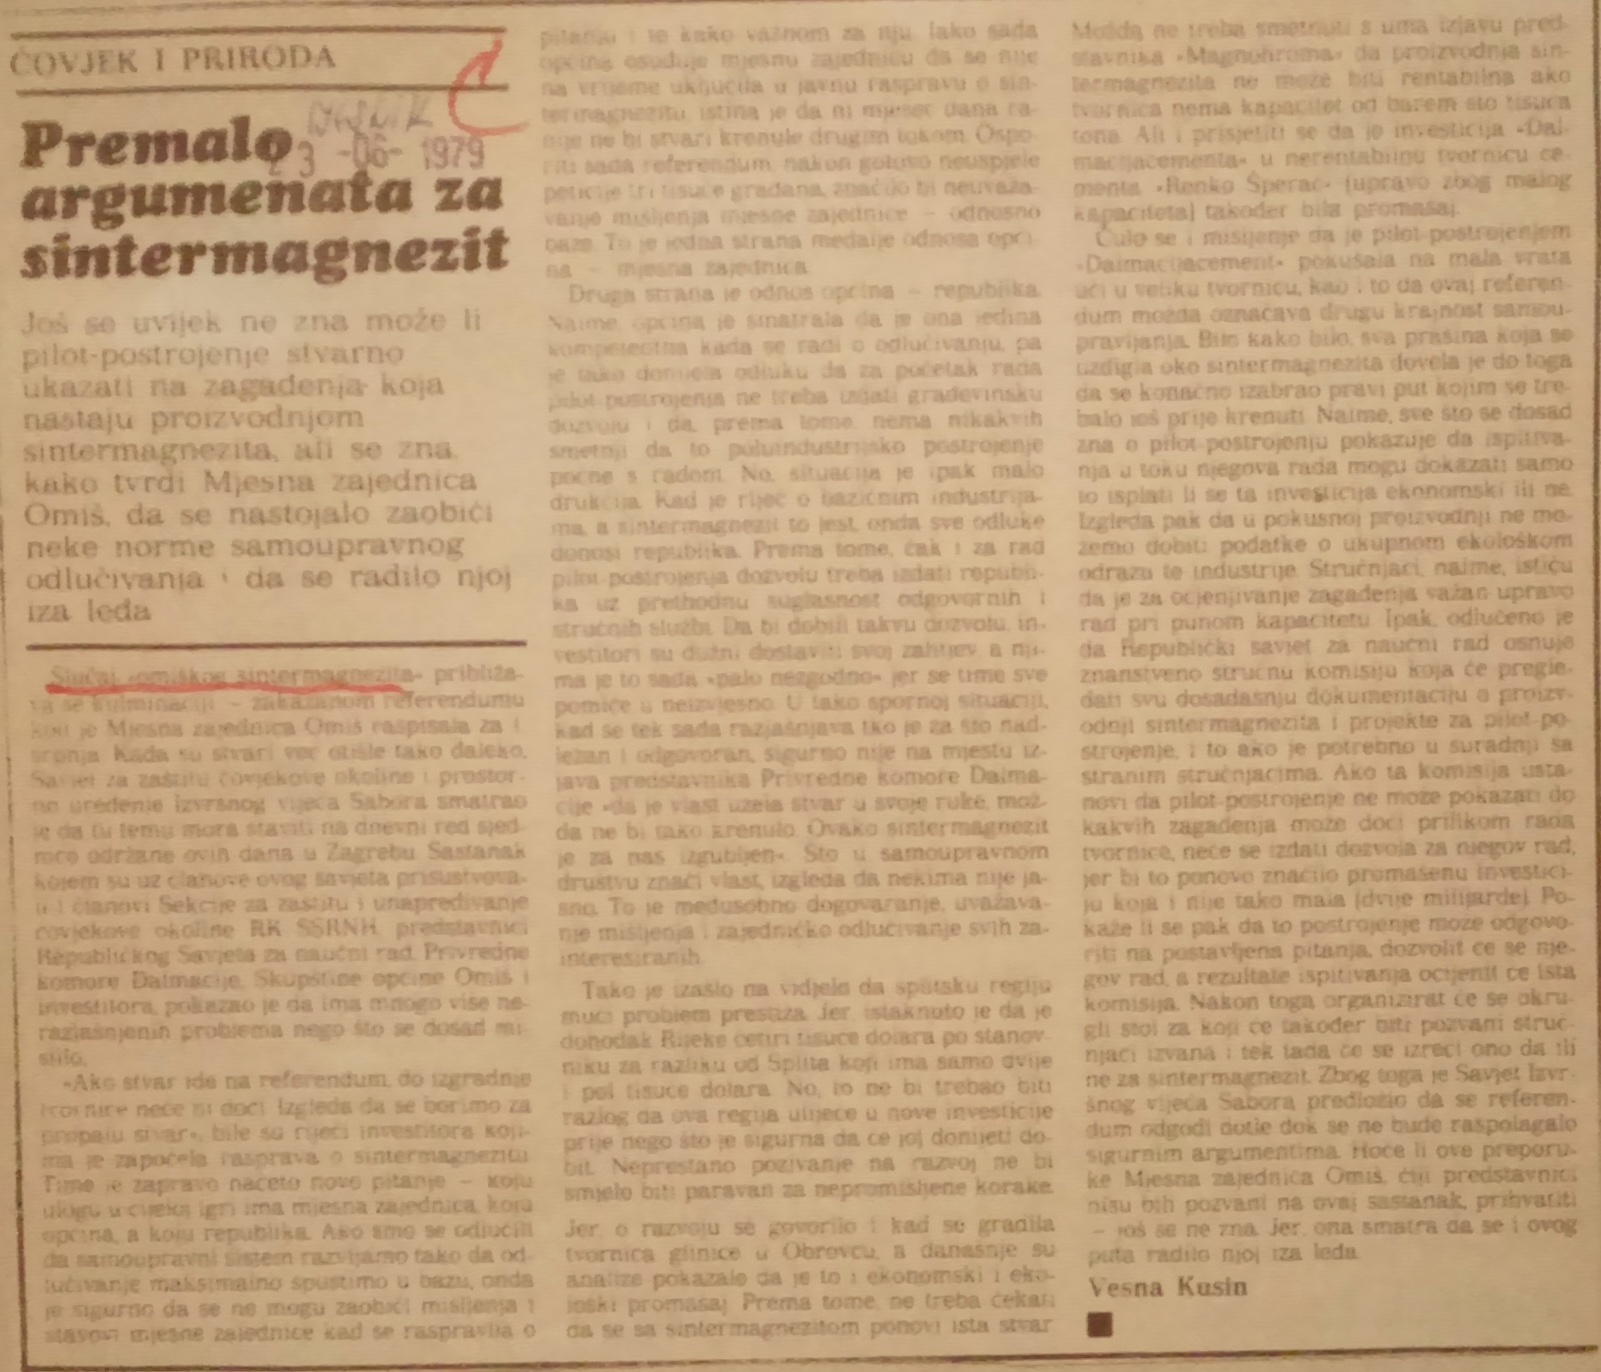 Kusin, Vesna. Too few good reasons for sintered magnesia [Premalo argumenata za sintermagnezit], Vjesnik, 23. June 1979. Press clipping